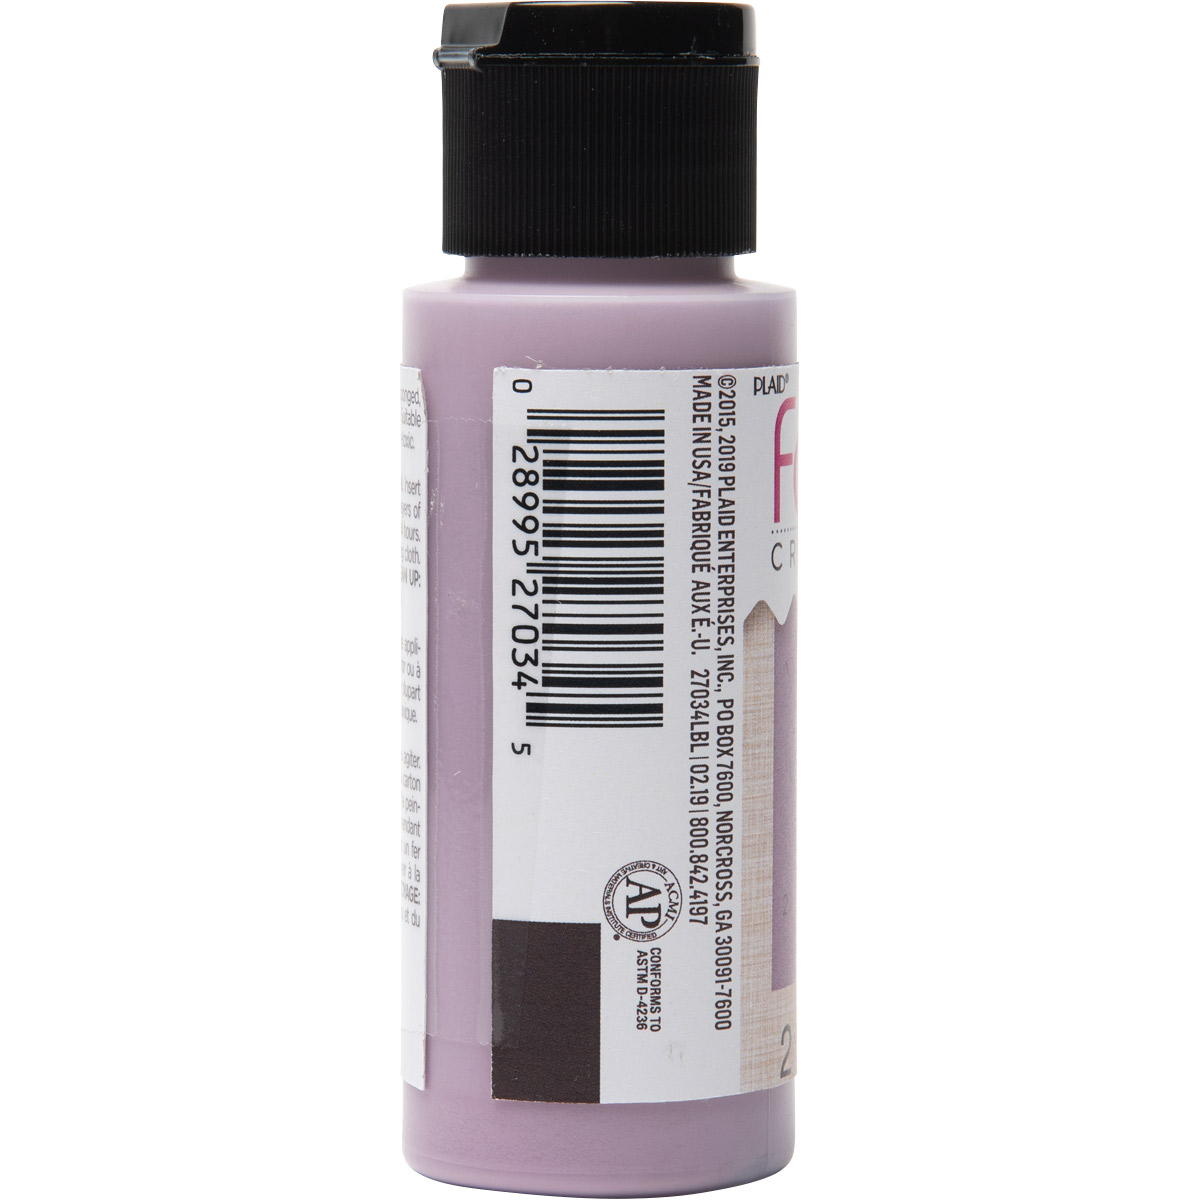 Fabric Creations™ Soft Fabric Inks - Sunwashed Lilac, 2 oz. - 27034